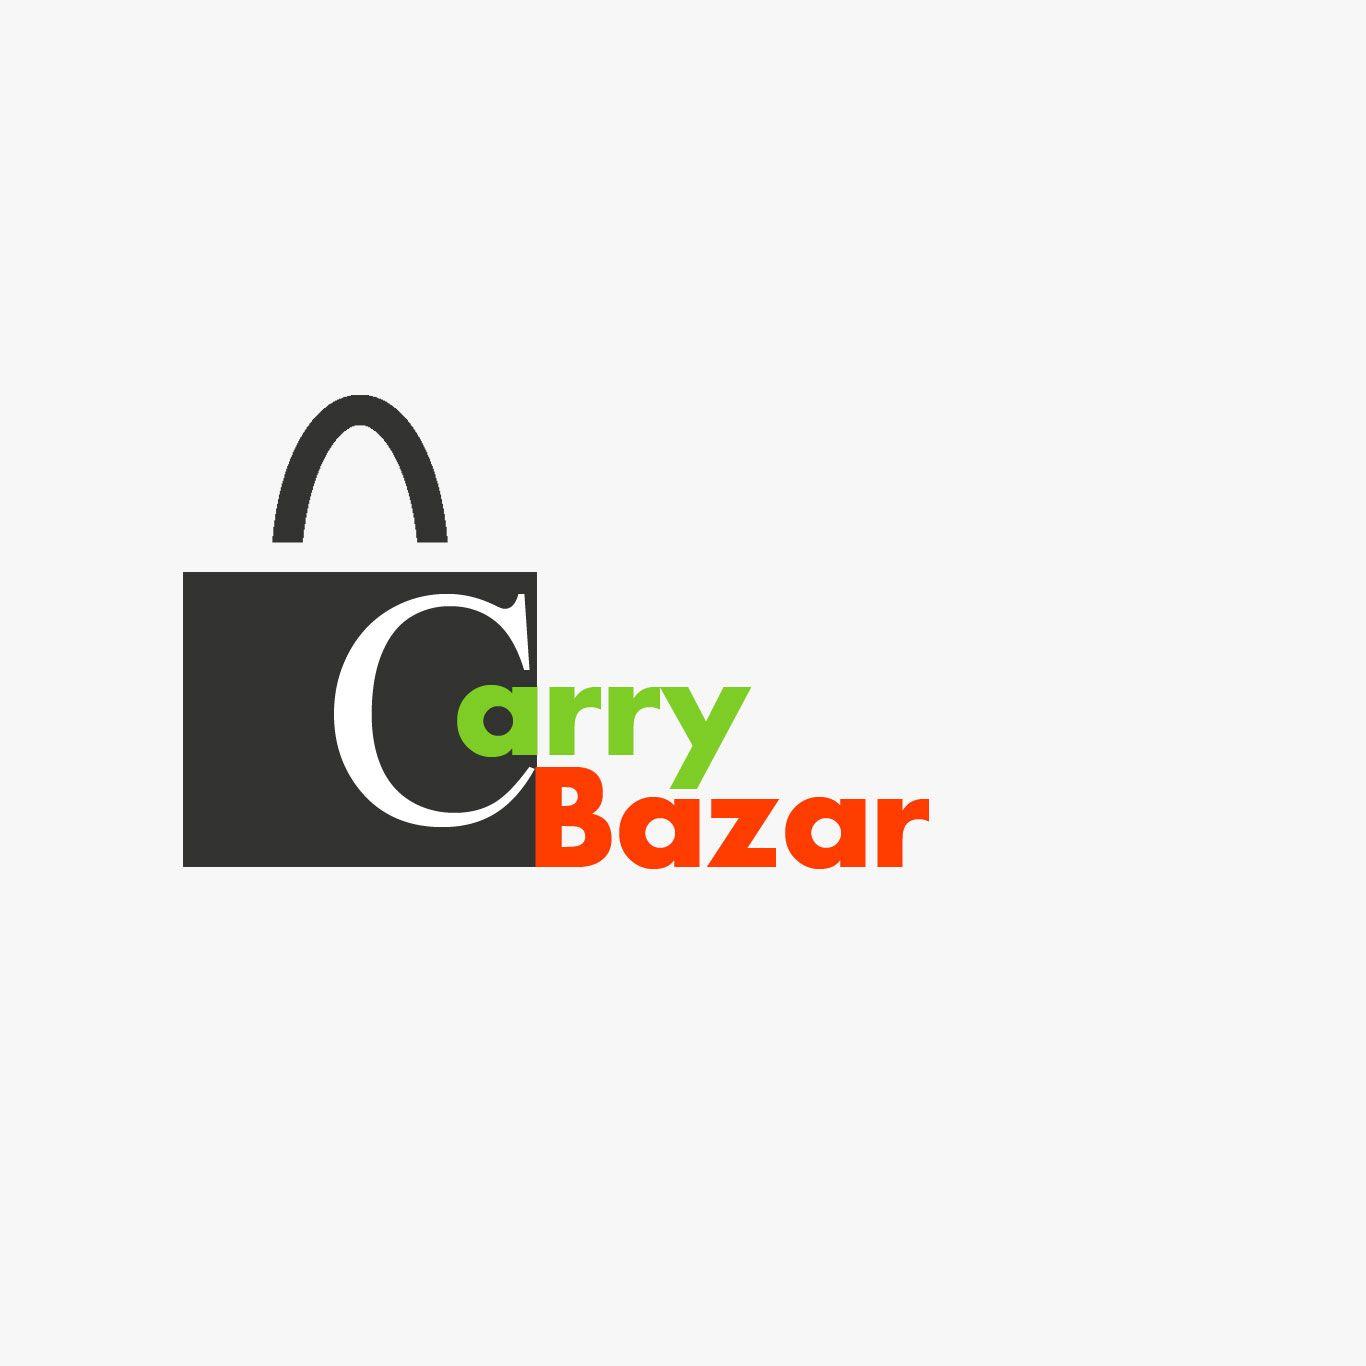 Bazar Logo - Carry Bazar Logo version2 - Pixels Theme